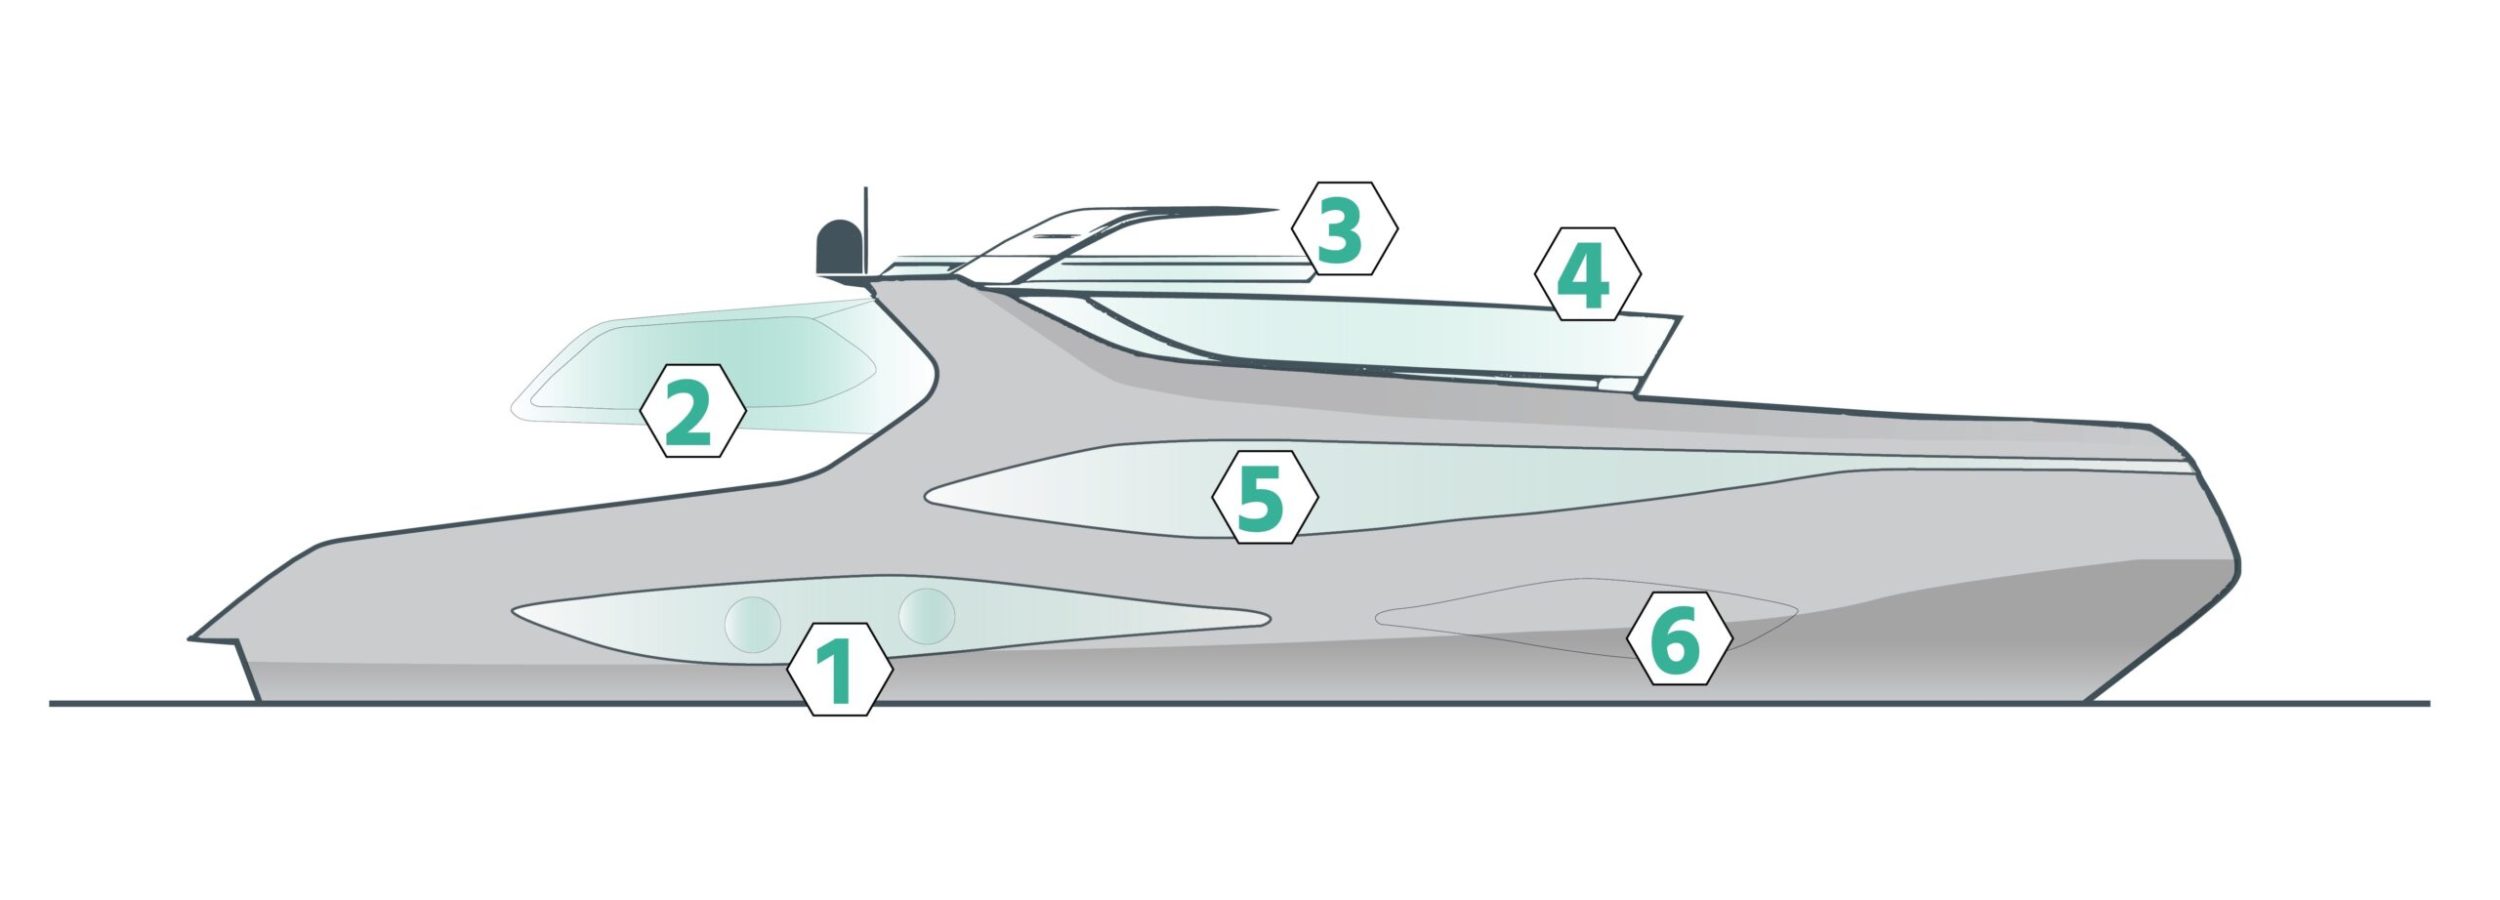 pannello yacht infographics-web-mobile